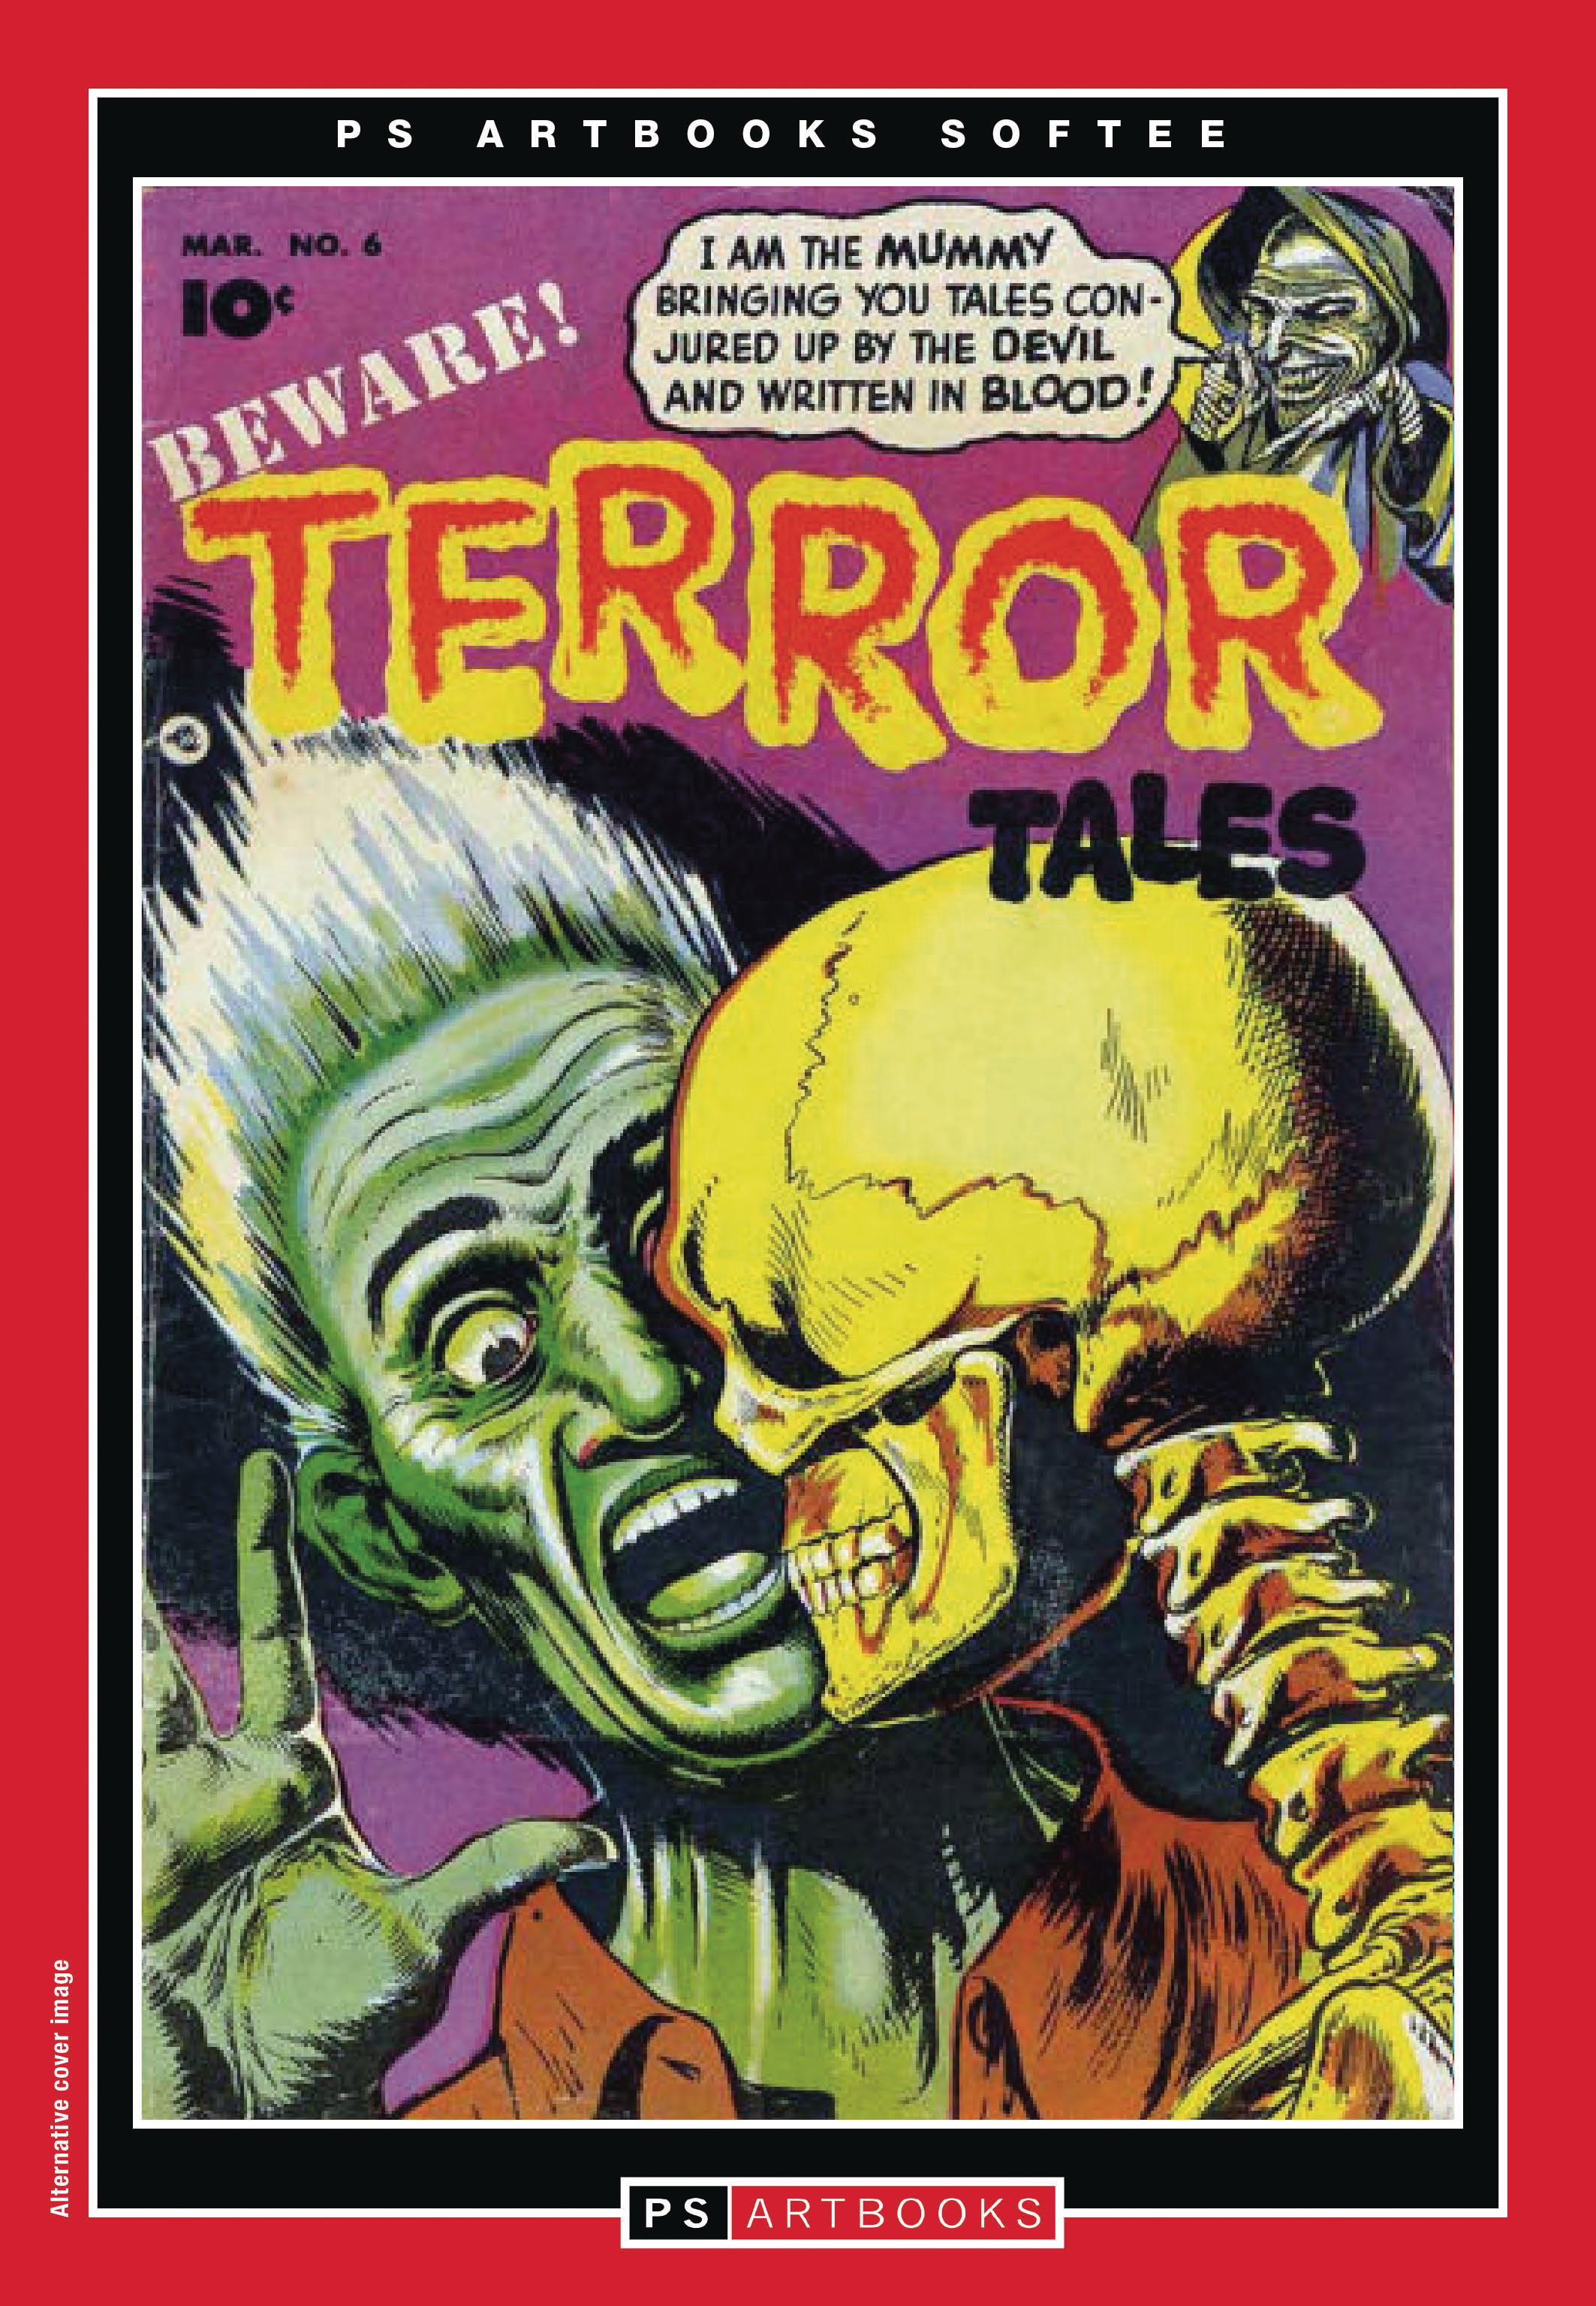 PS Artbooks Beware Terror Tales Softee Volume 2